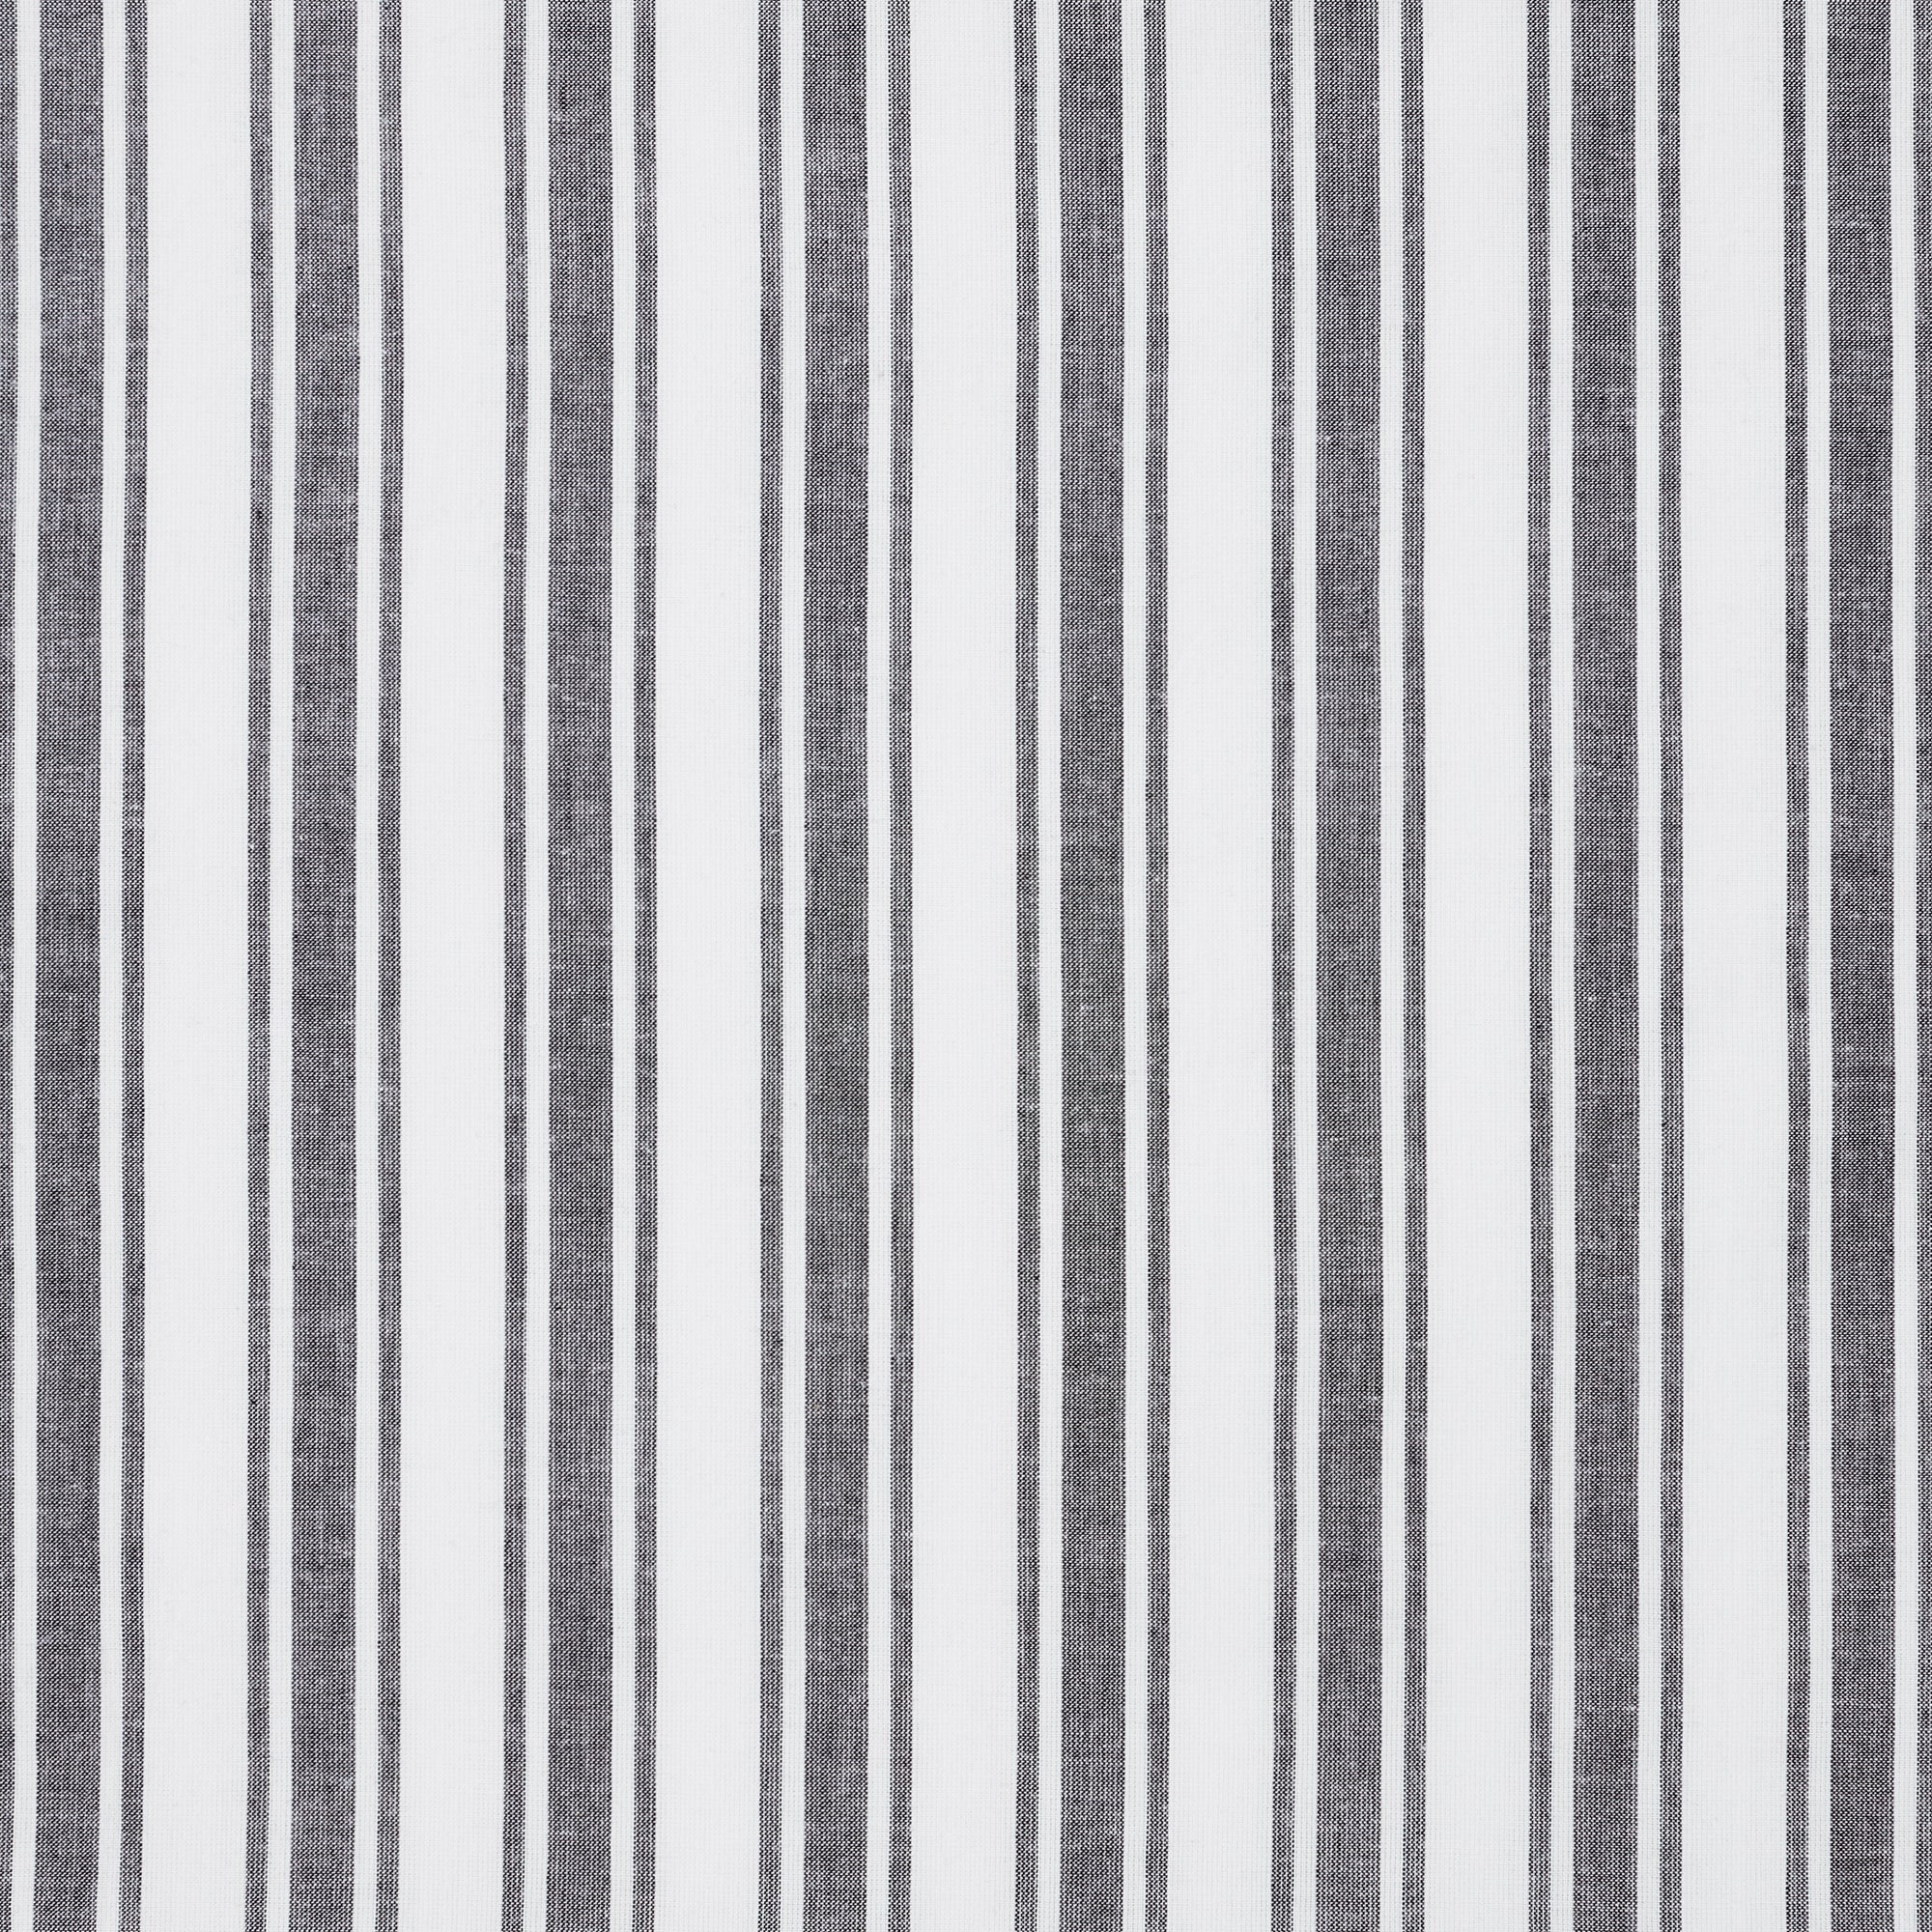 Sawyer Mill Black Ticking Stripe Swag Set of 2 36x36x16 VHC Brands